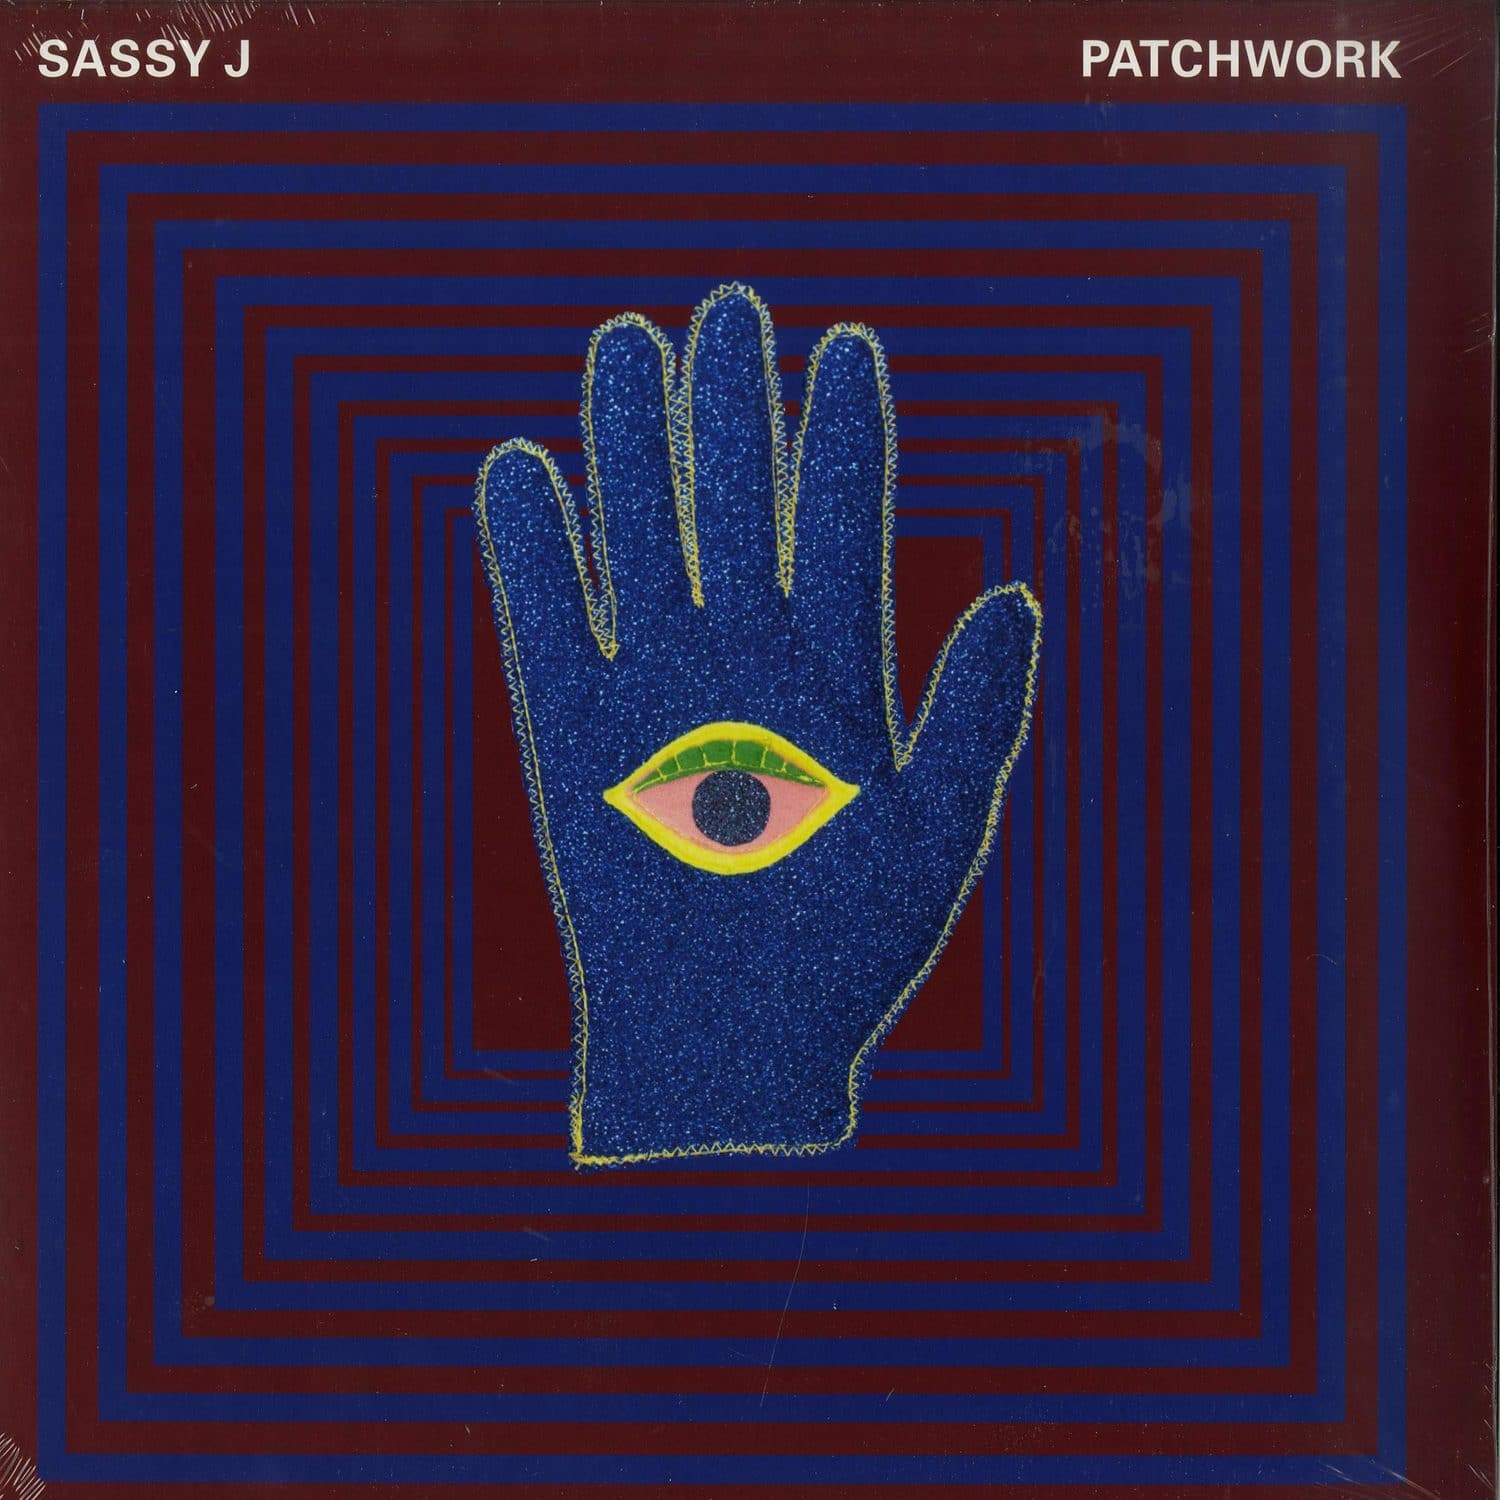 Sassy J - PATCHWORK 